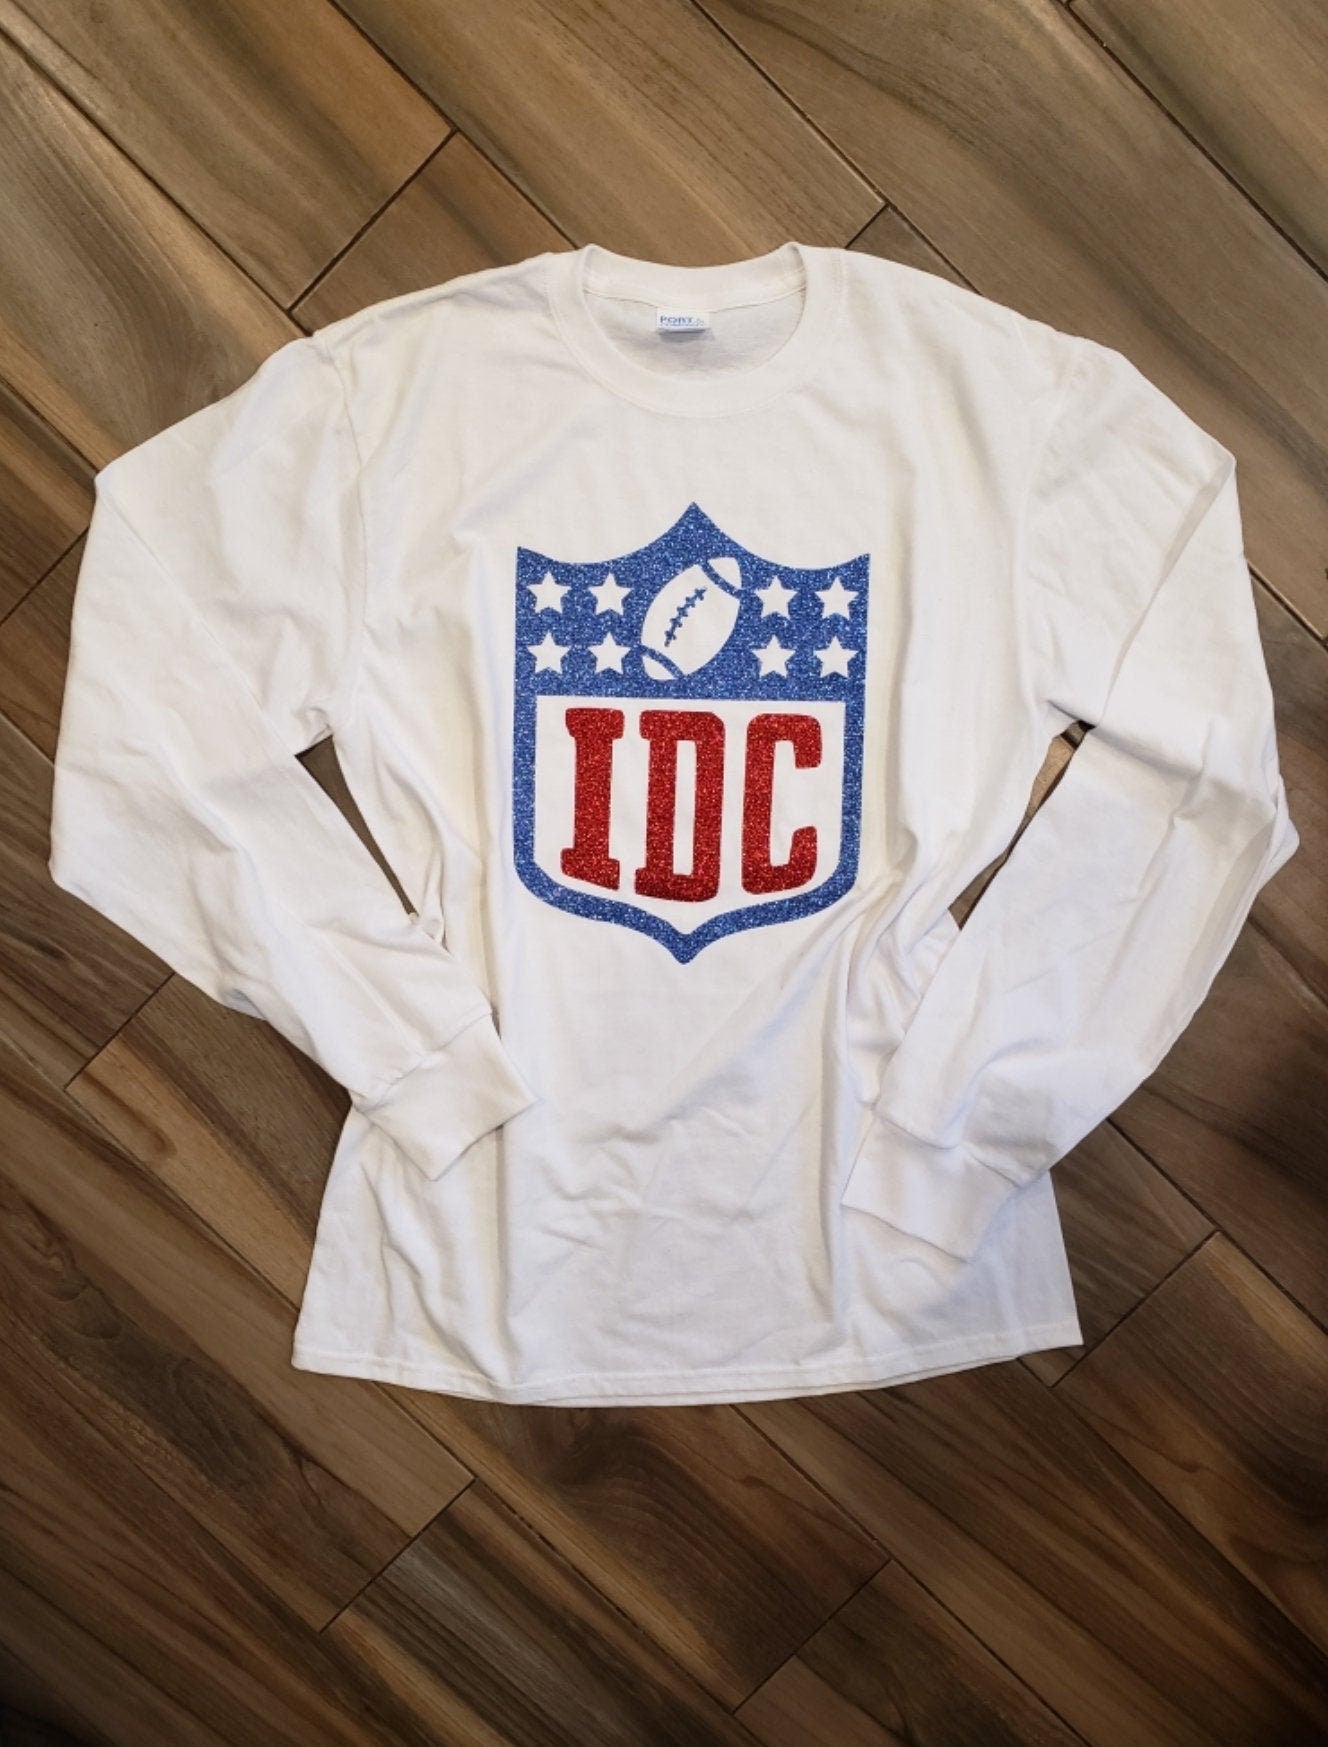 idc nfl shirt